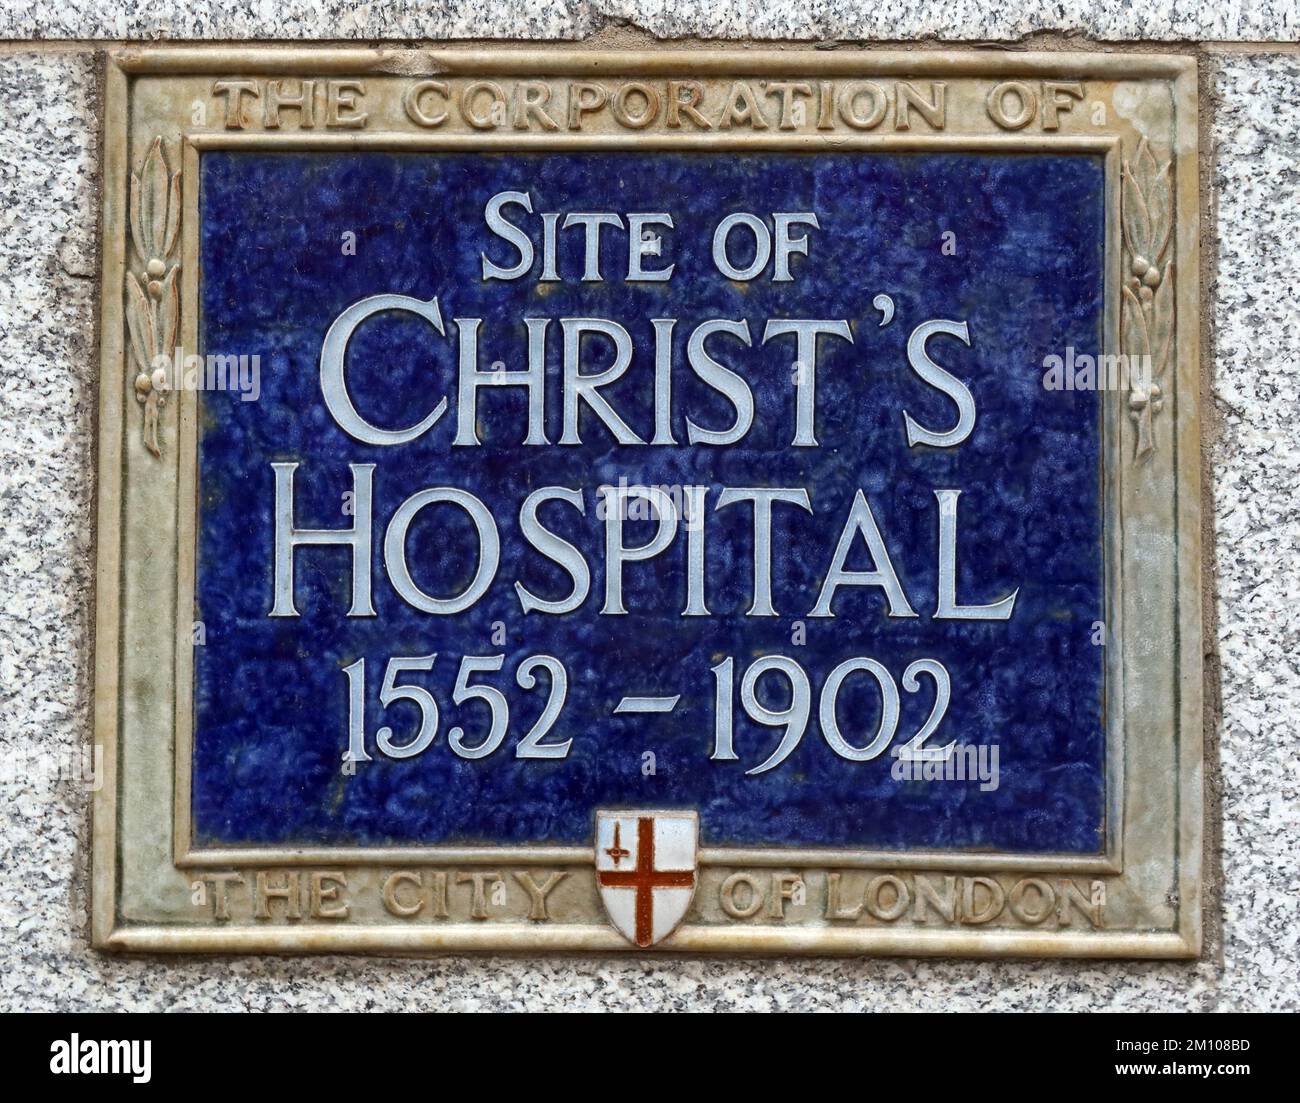 Site of Christs Hospital 1552-1902, City of London Plaque, Christchurch, Newgate Street, London, England, UK, EC1A 7AJ Stockfoto